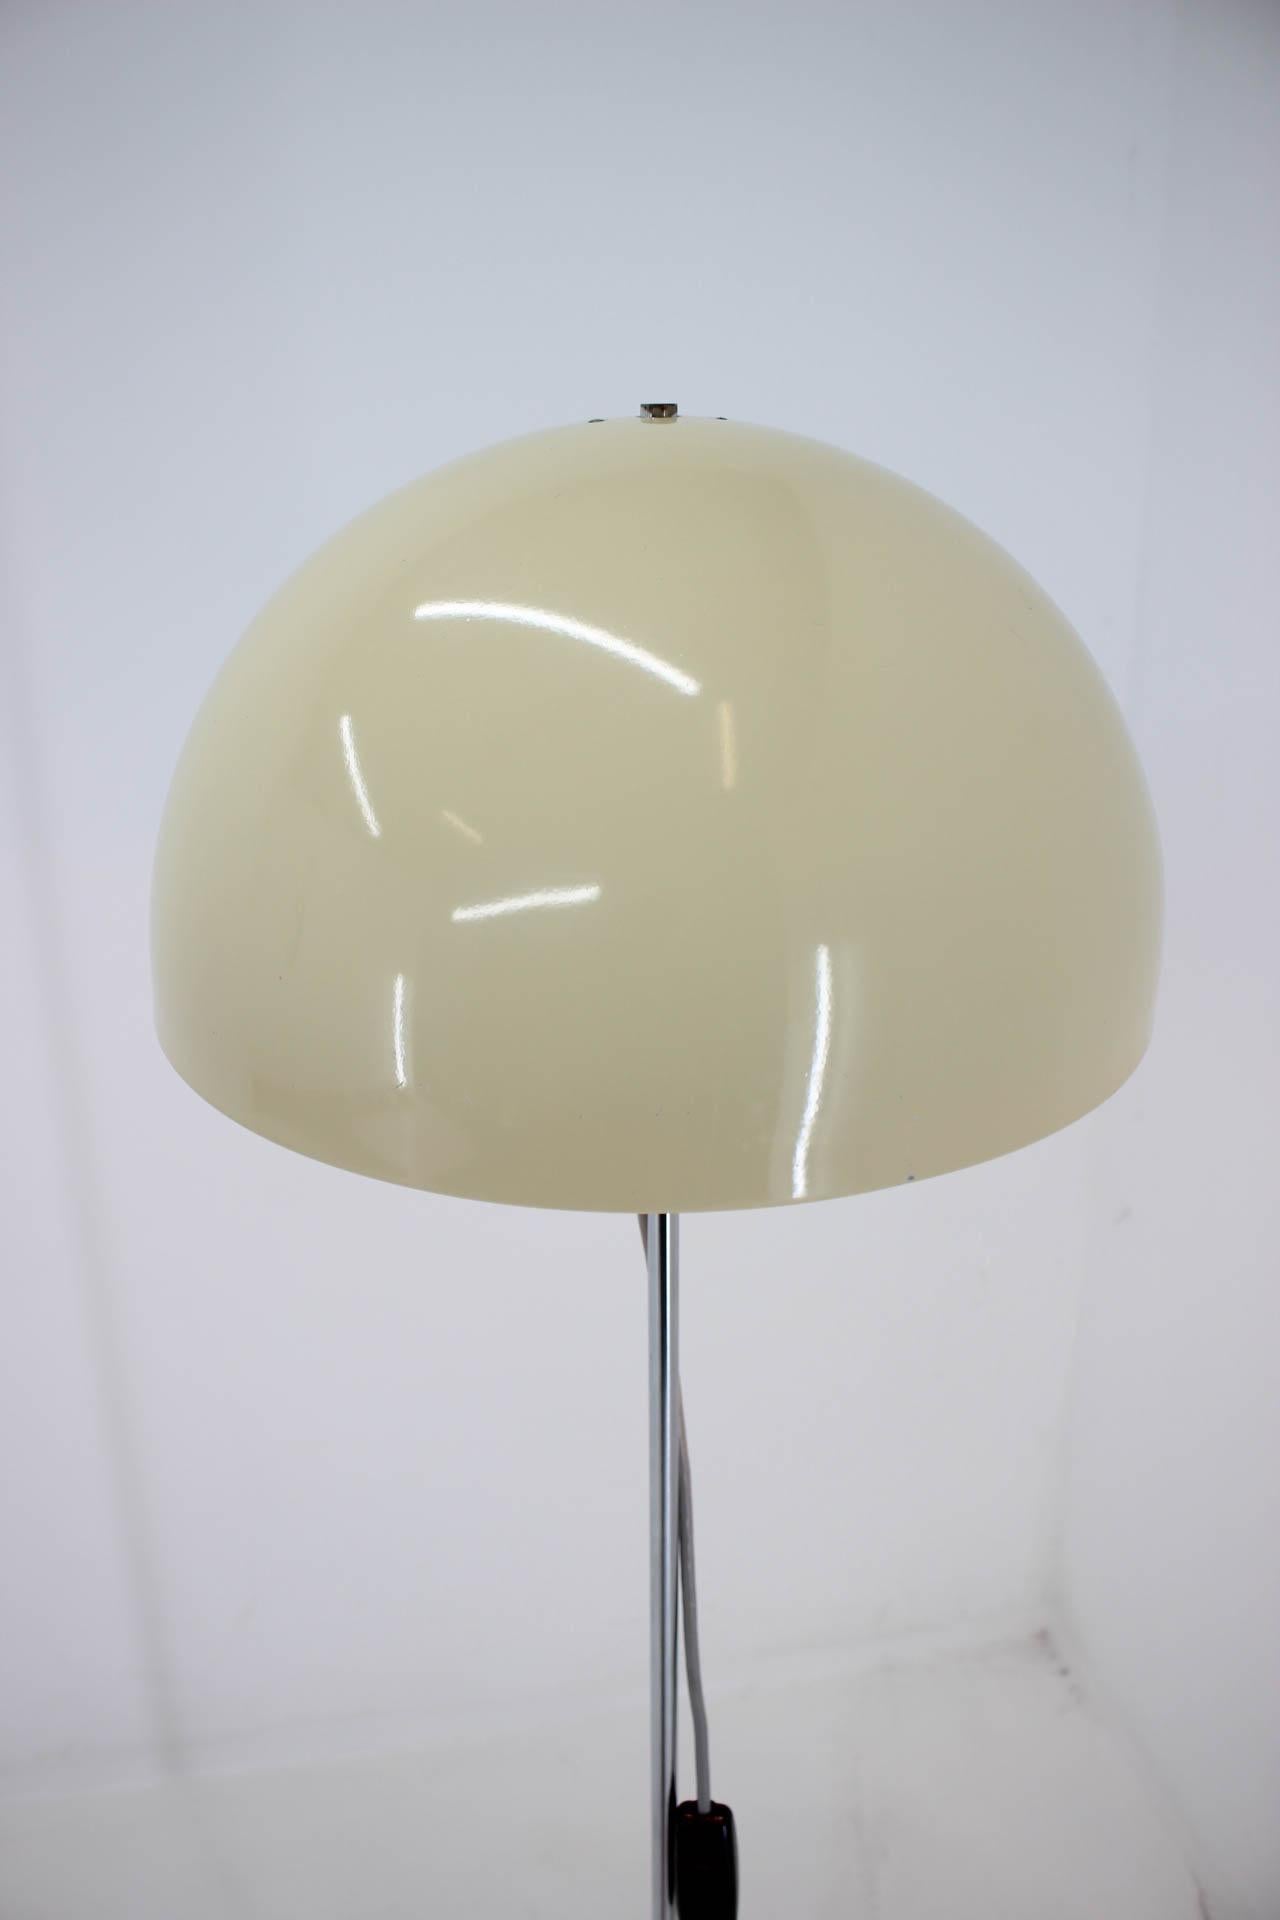 Floor lamp with adjustable shade.
Fully functional
2x60W, E27 bulbs.